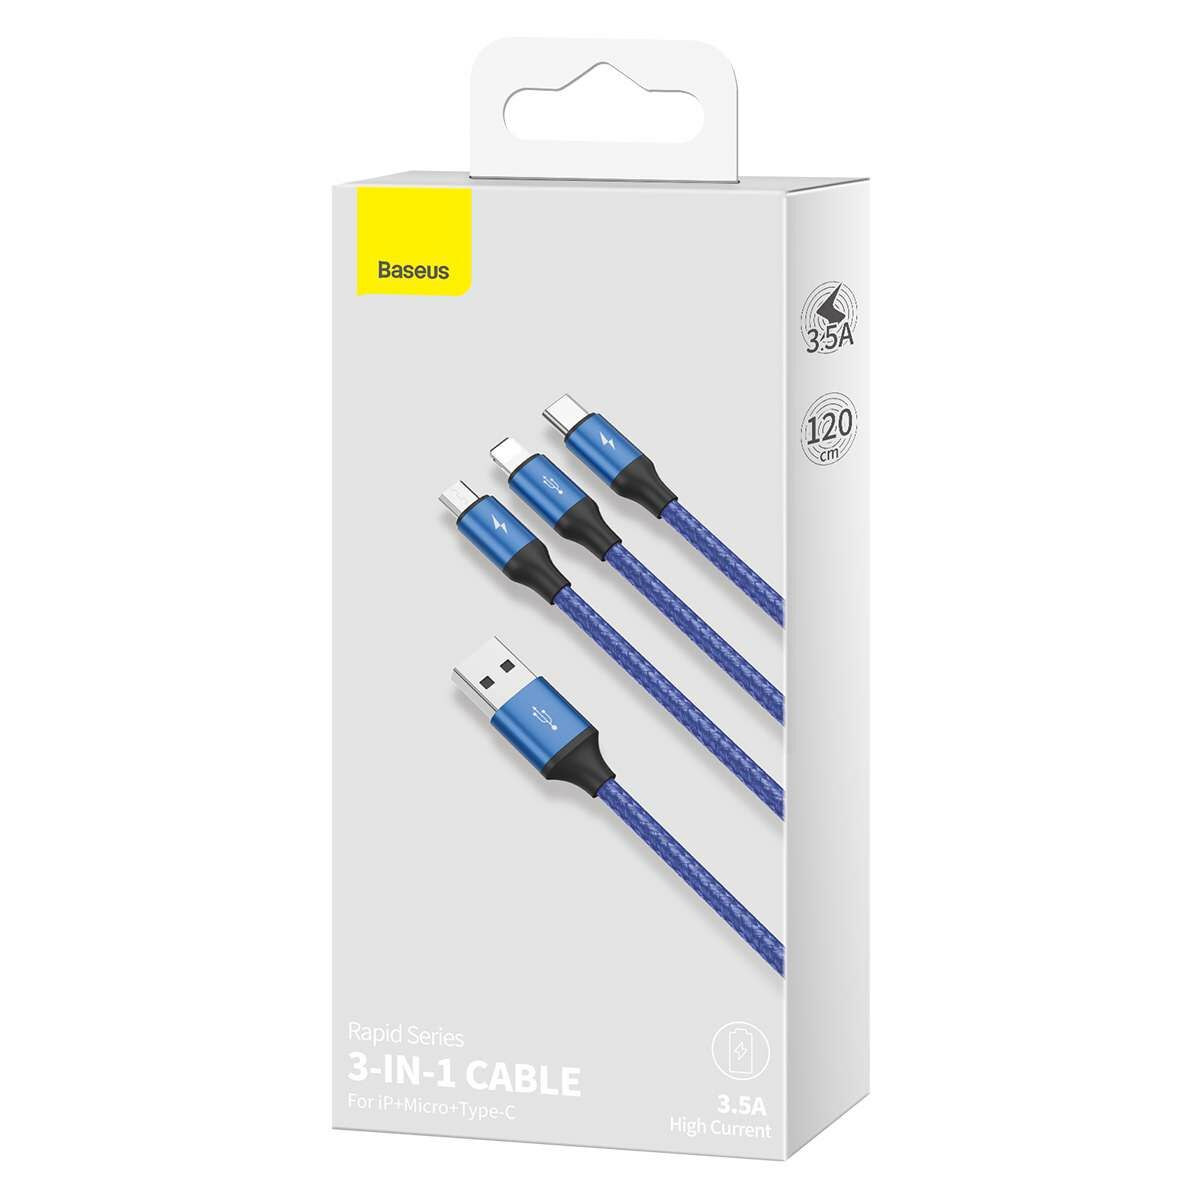 Baseus Univerzális kábel, Rapid 3-in-1, USB - Type-C / Lightning / micro USB, 1.2m, kék (CAJS000003)